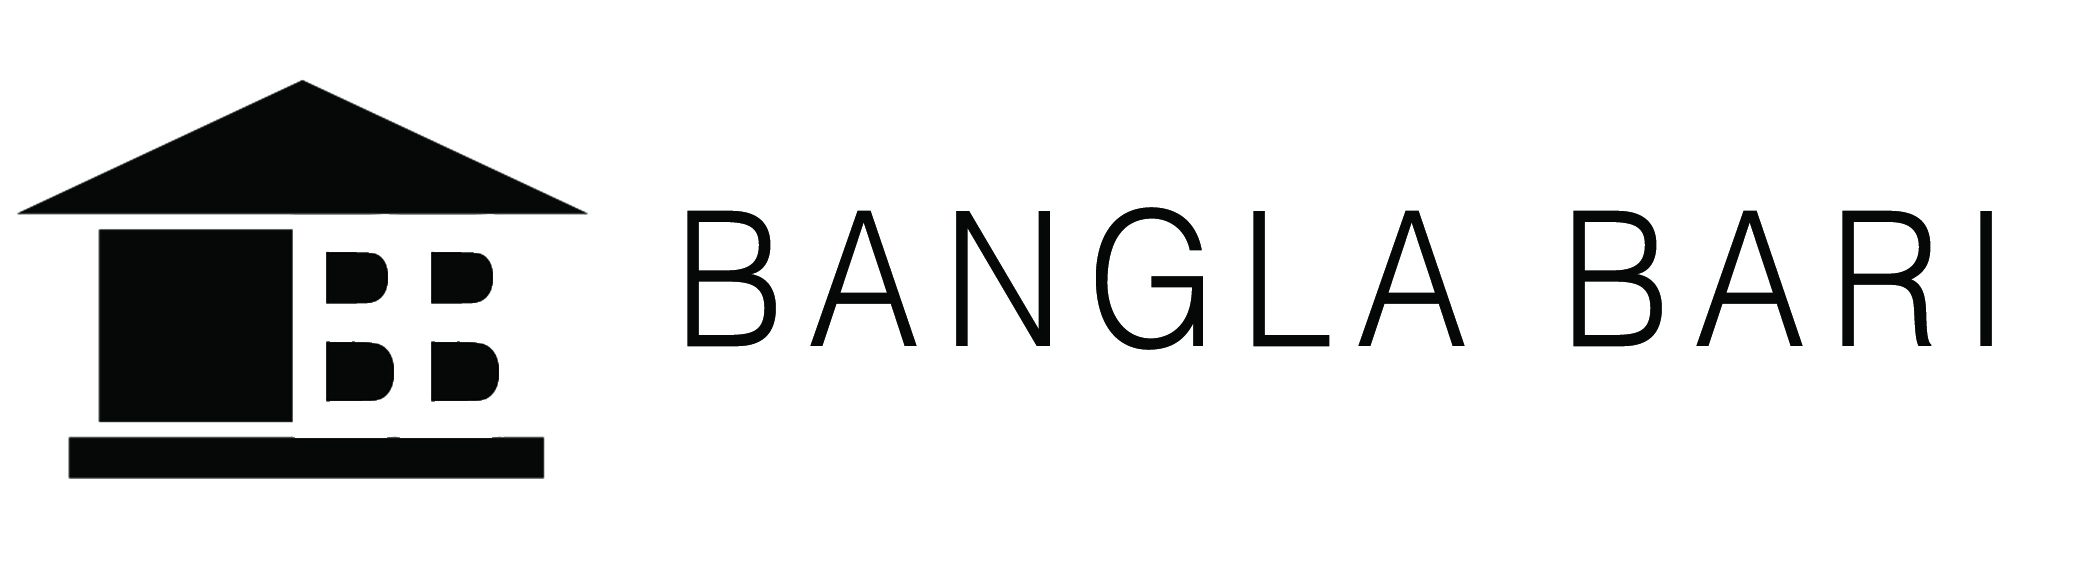 BANGLA BARI